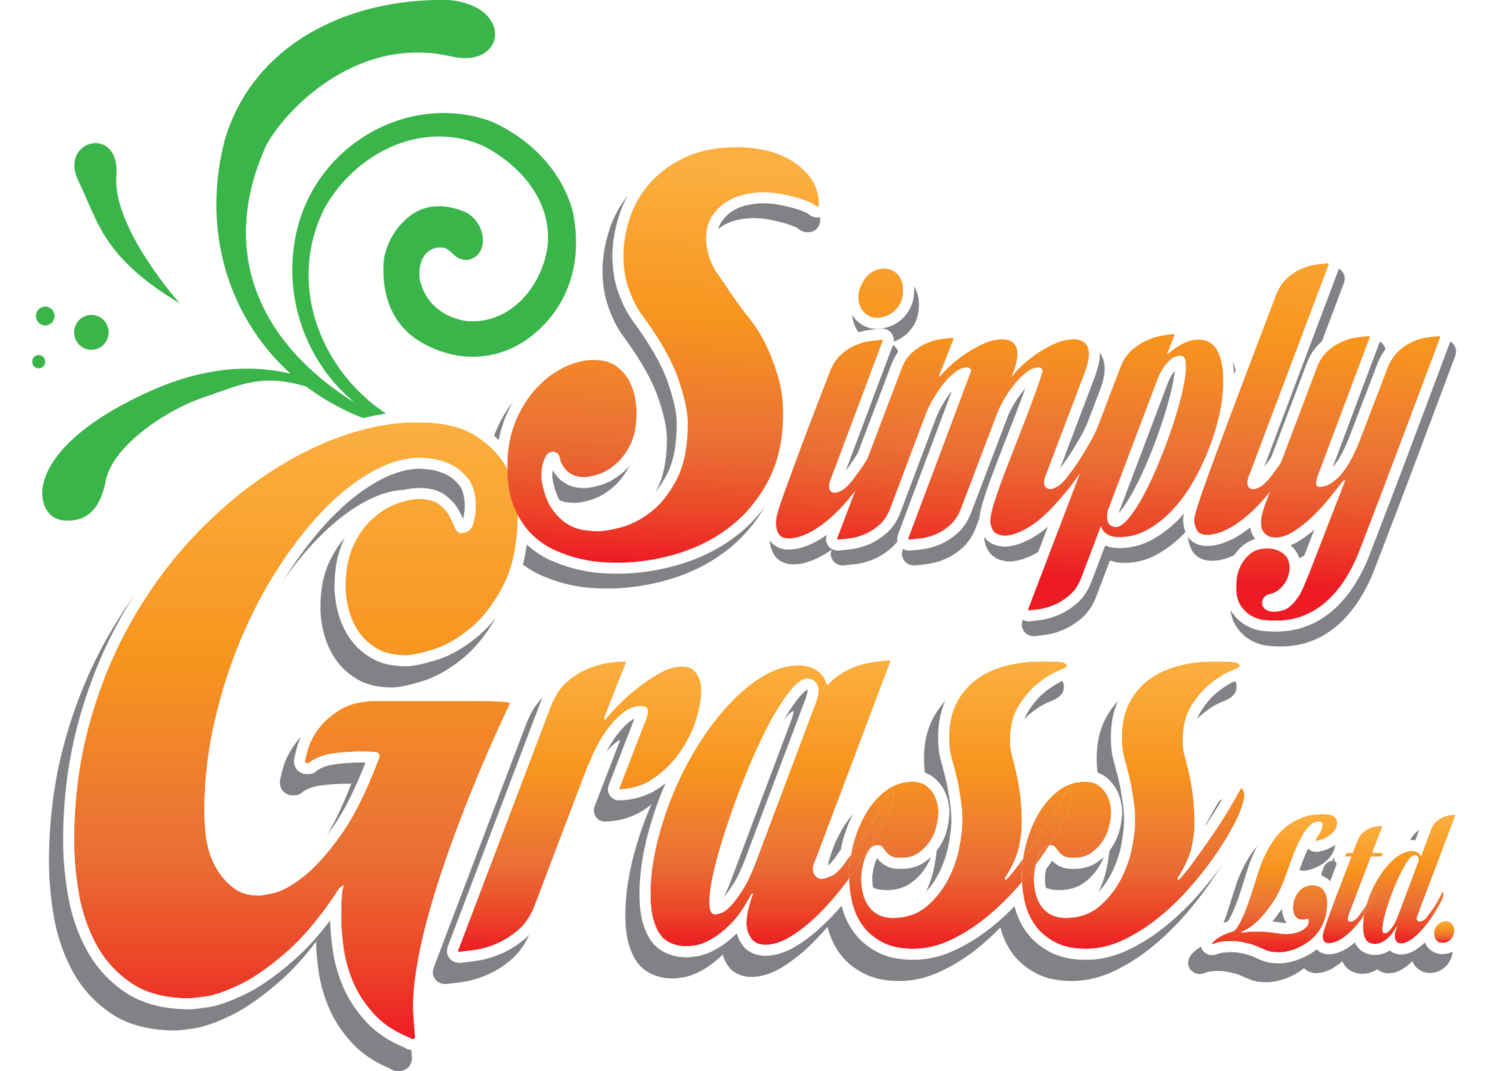 Simply Grass